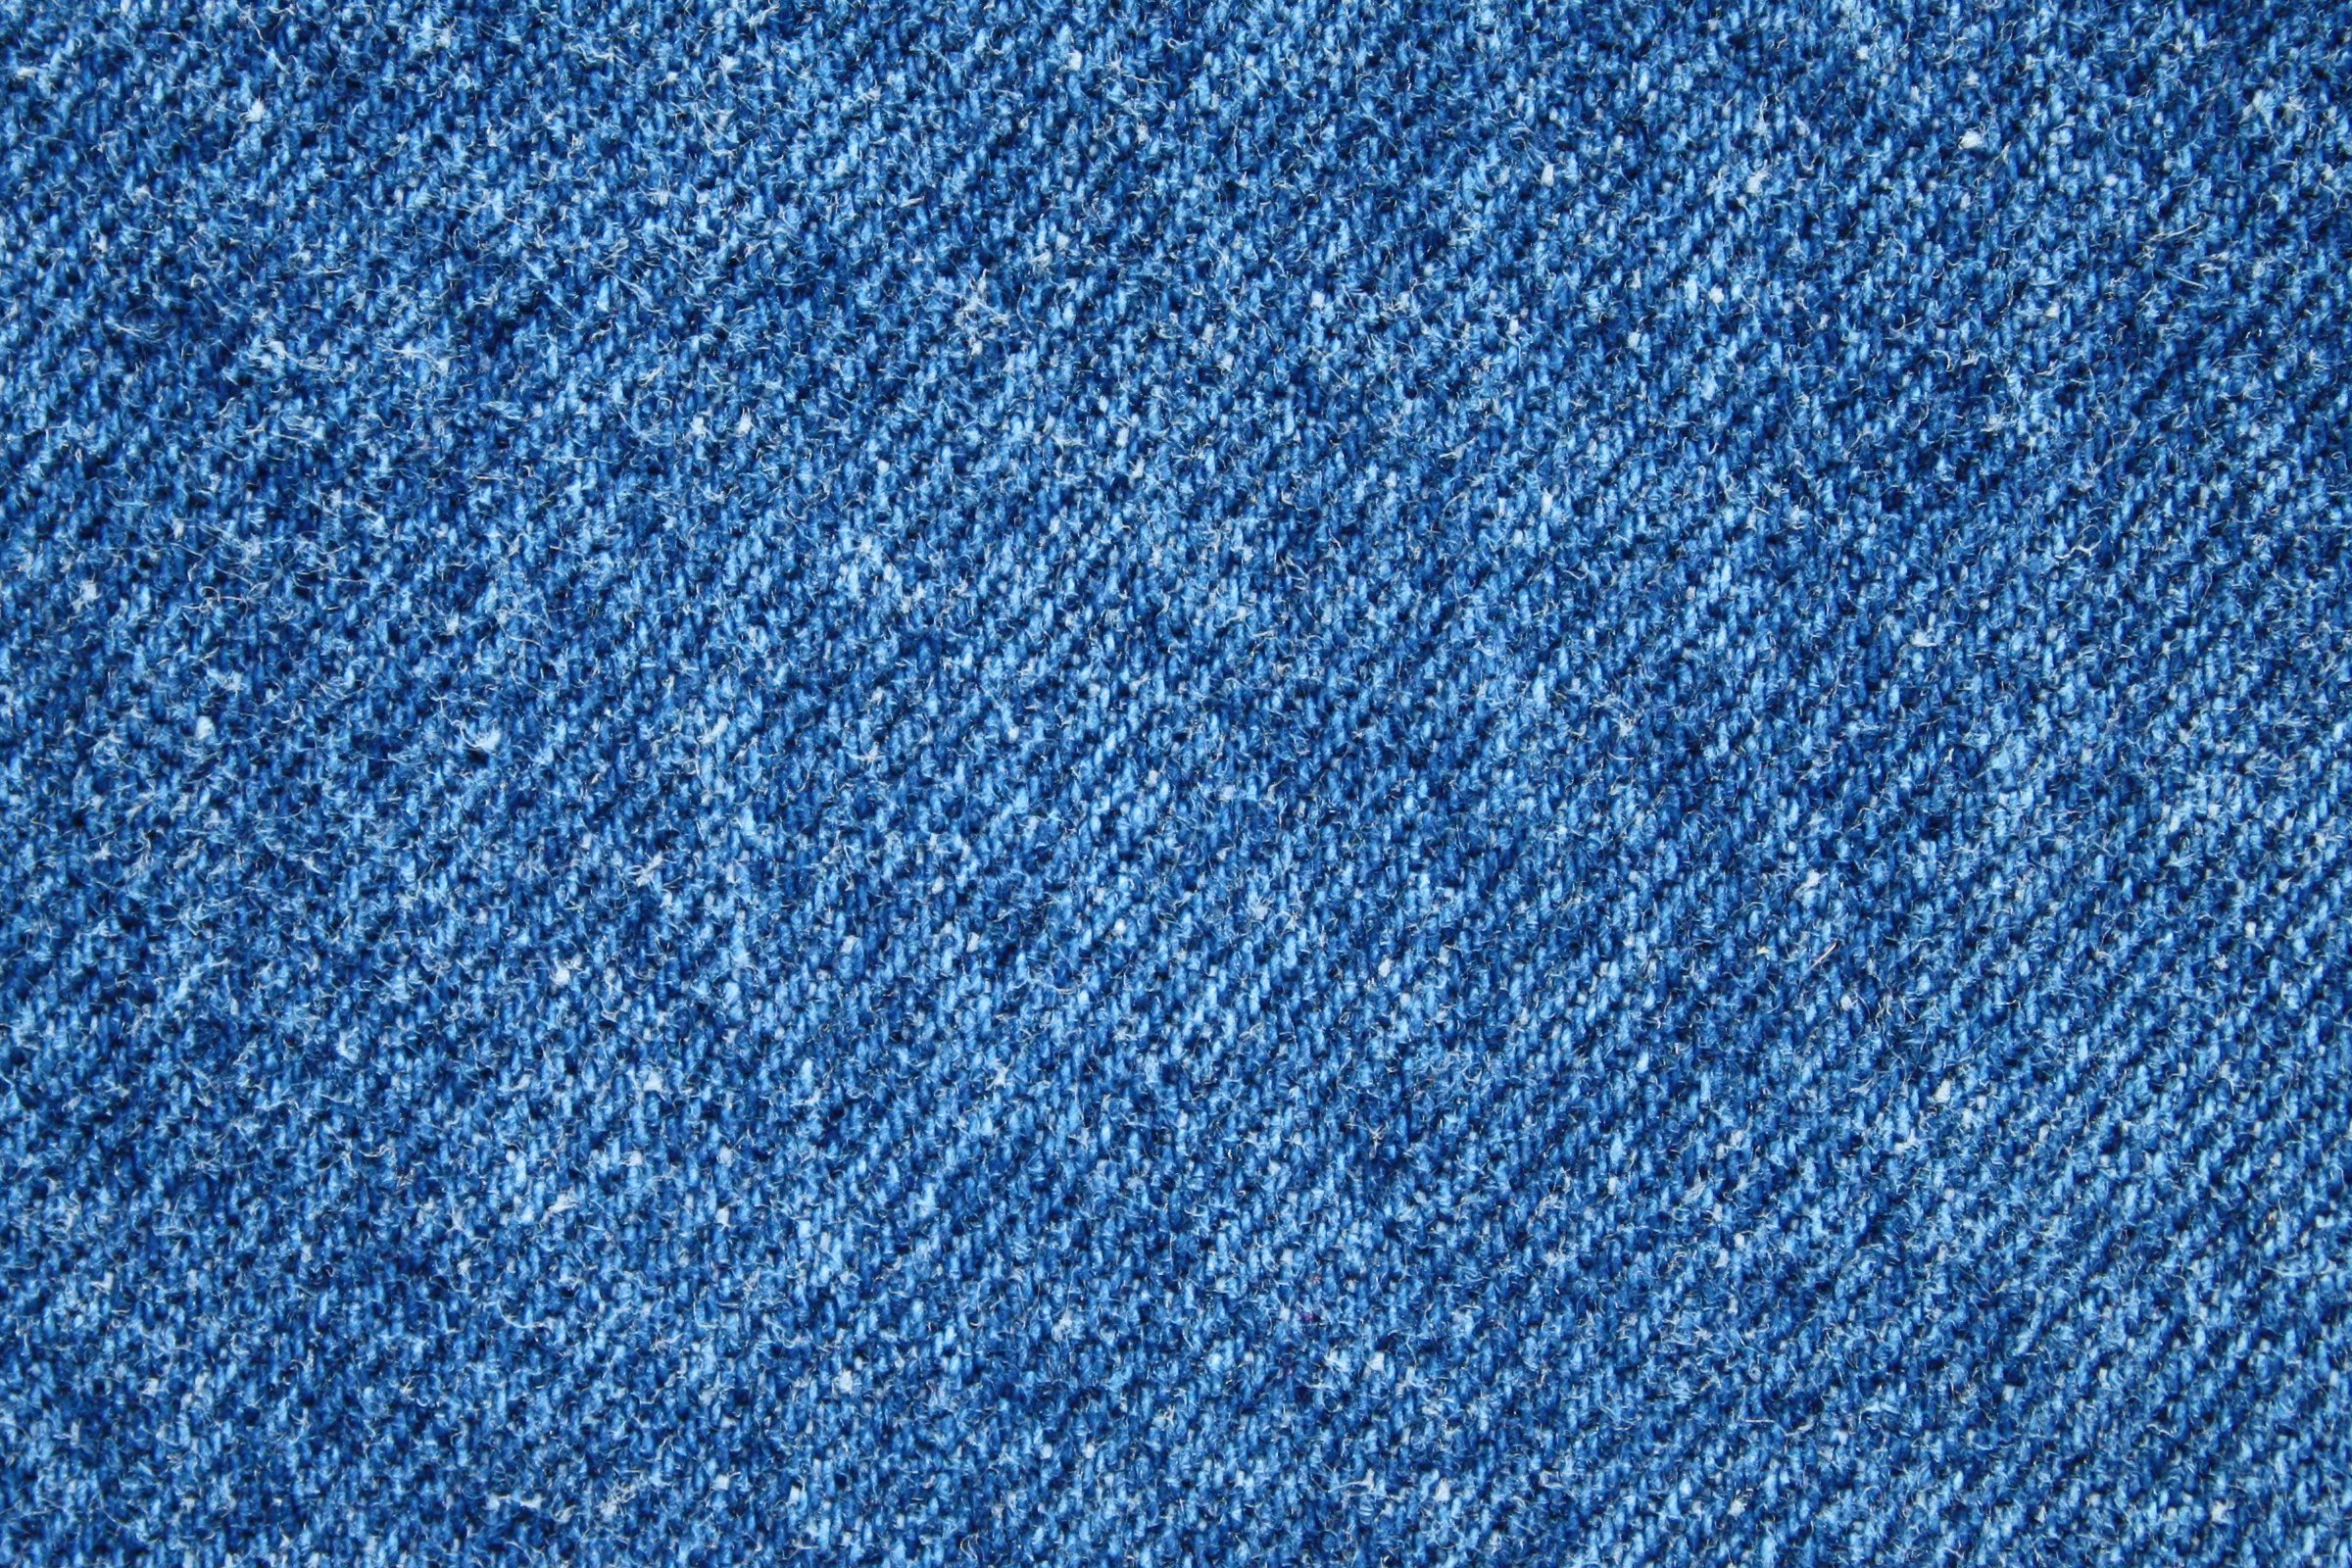 Jeans background. Light blue denim fabric texture close up. Stock Photo by  ©Kazmulka 120963378